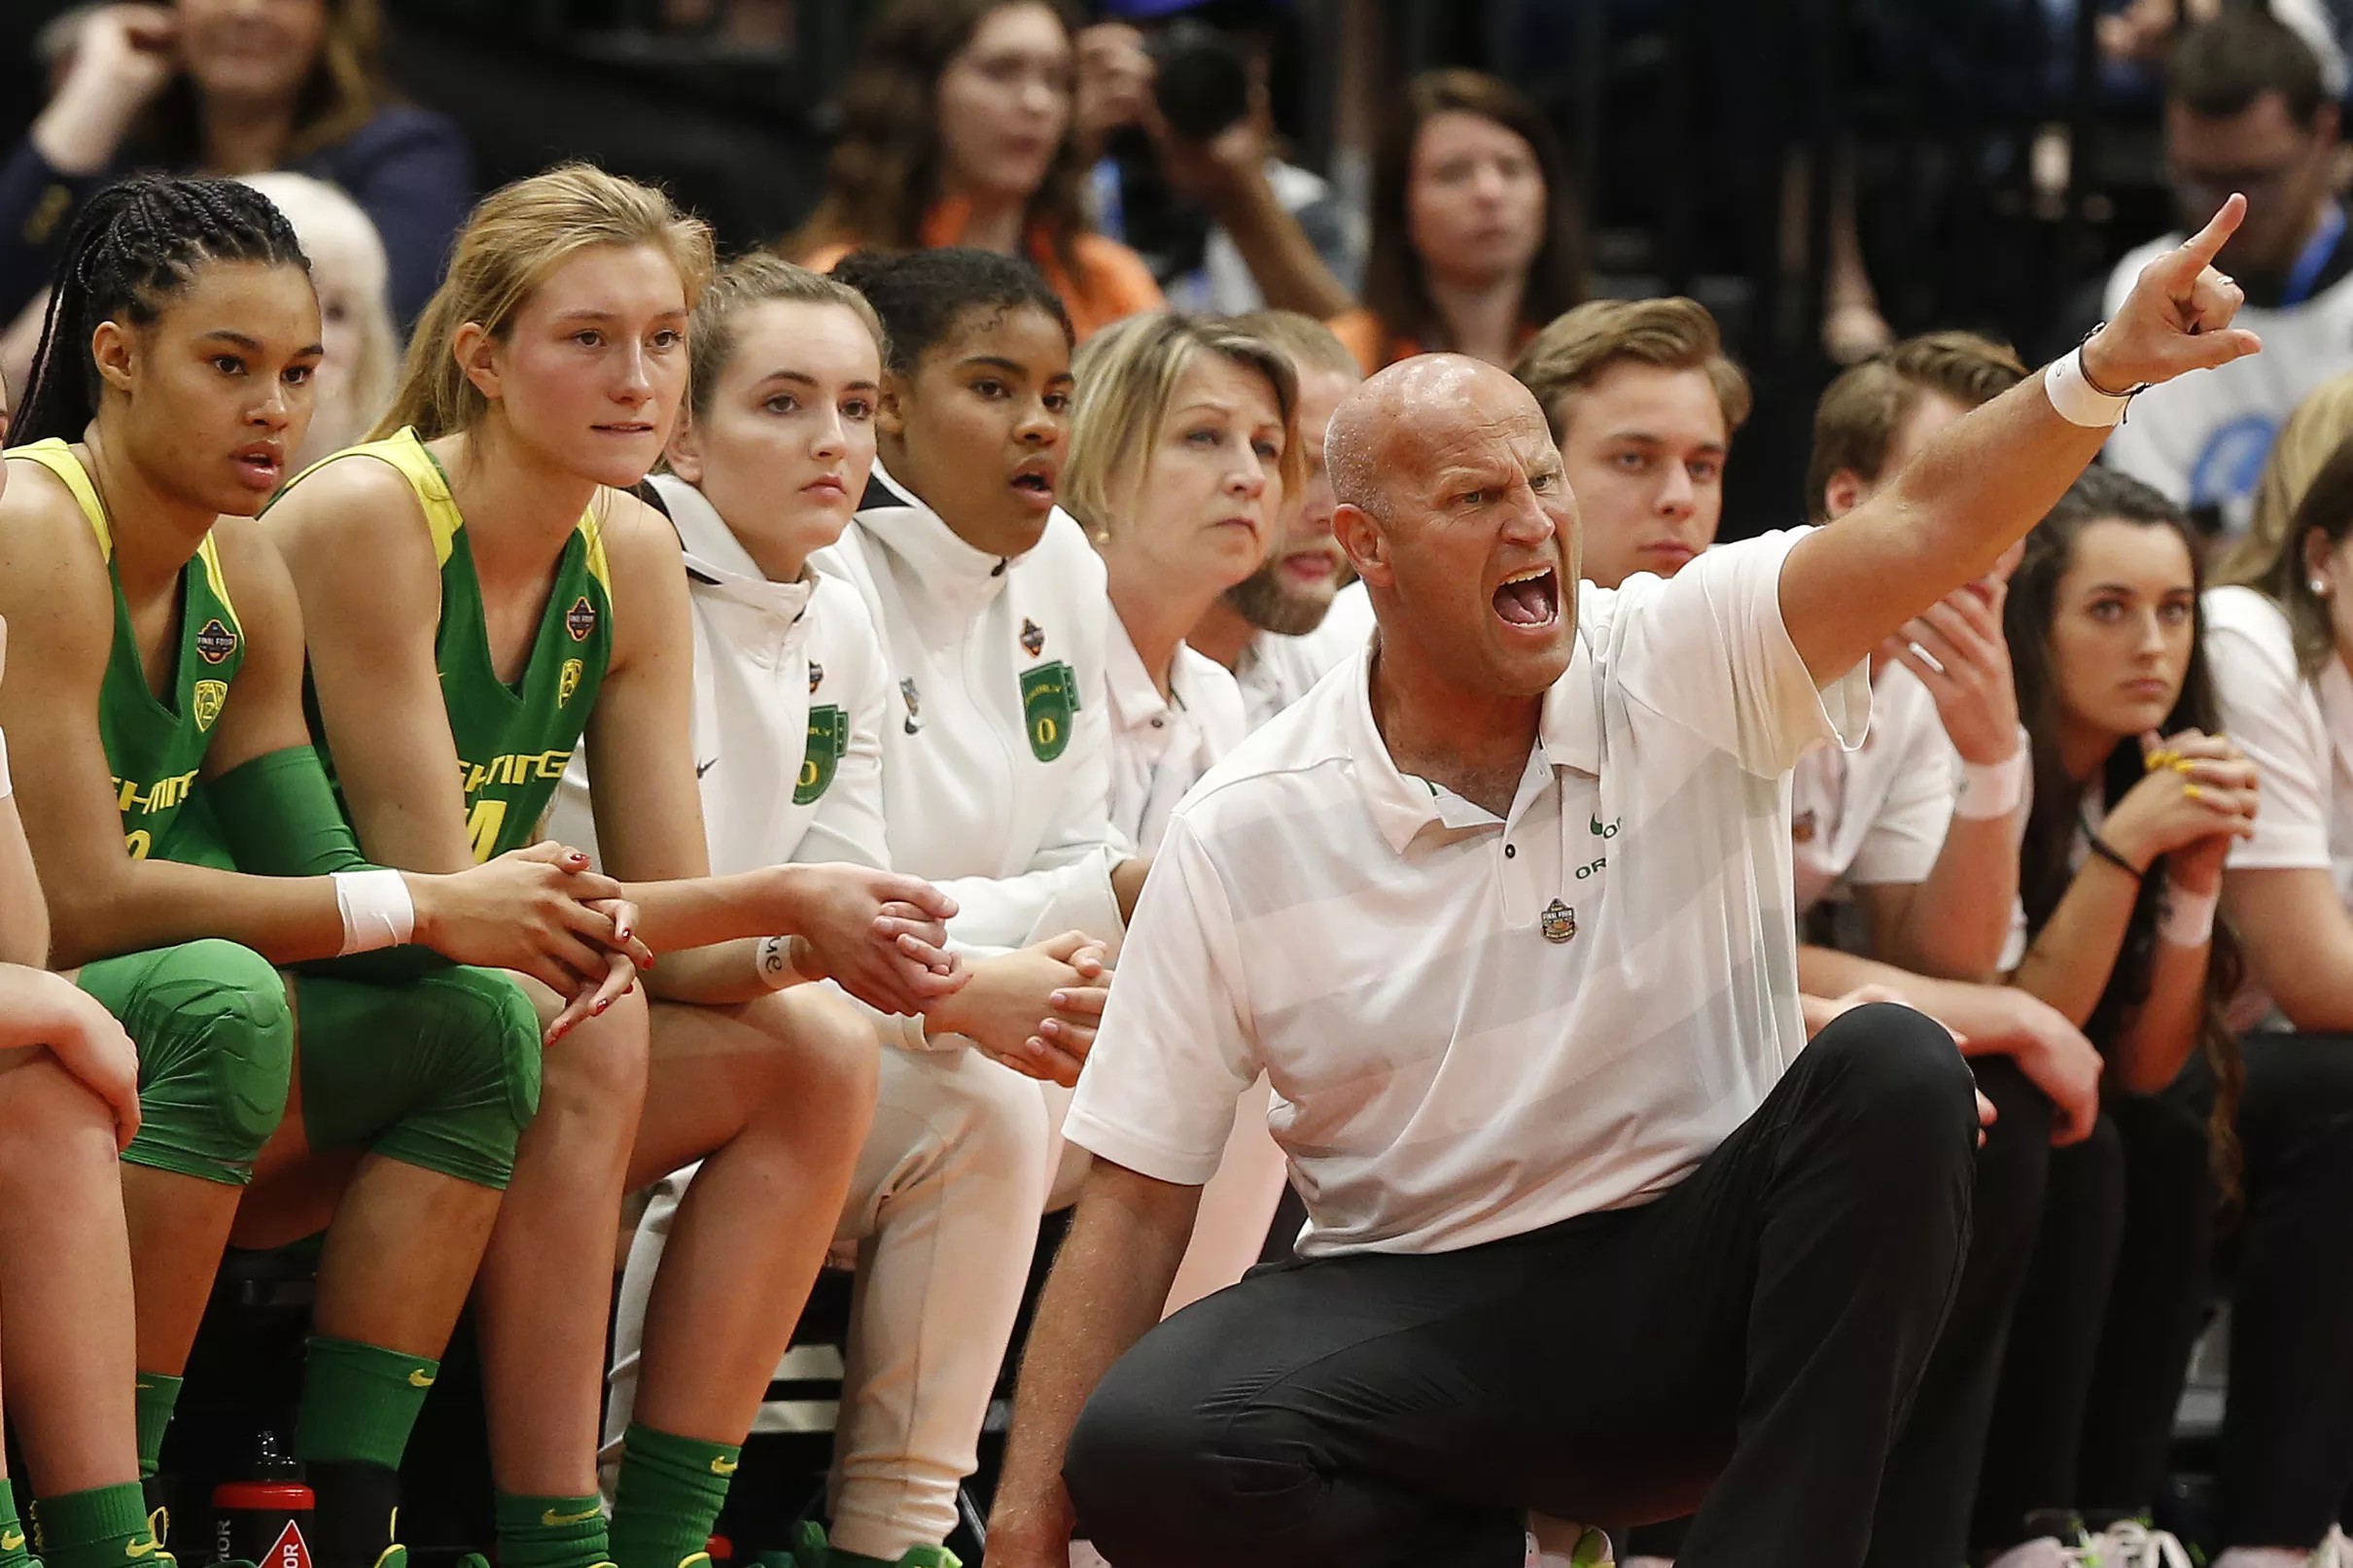 2020 5* Guard Maddie Scherr Commits to Oregon Women’s Basketball